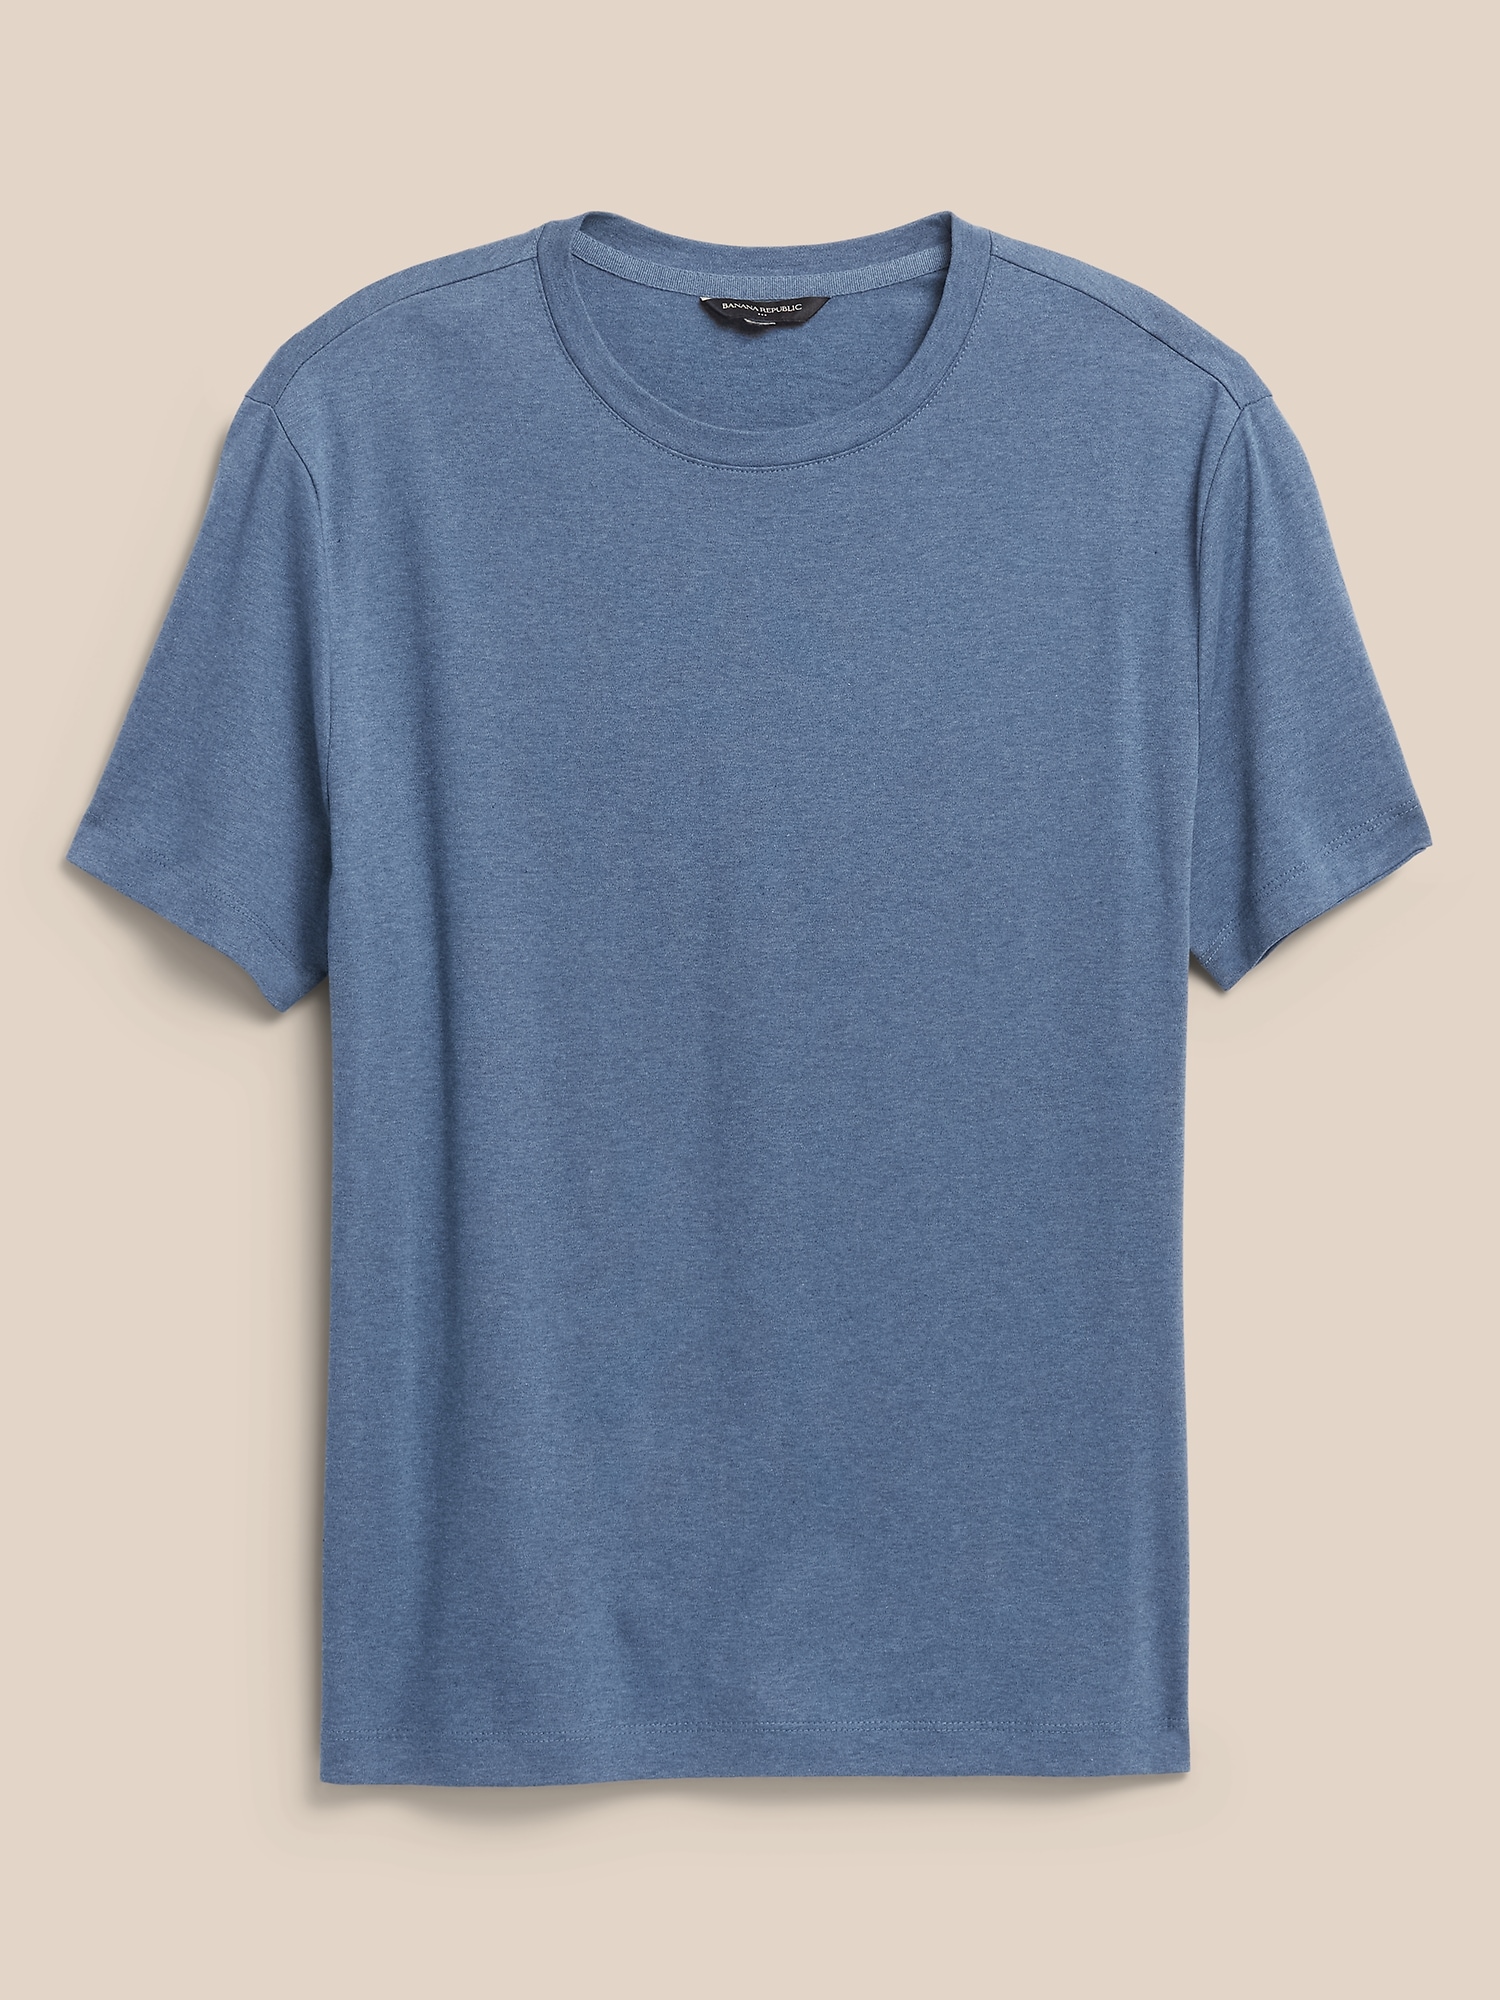 Luxe T-Shirt | Republic Factory